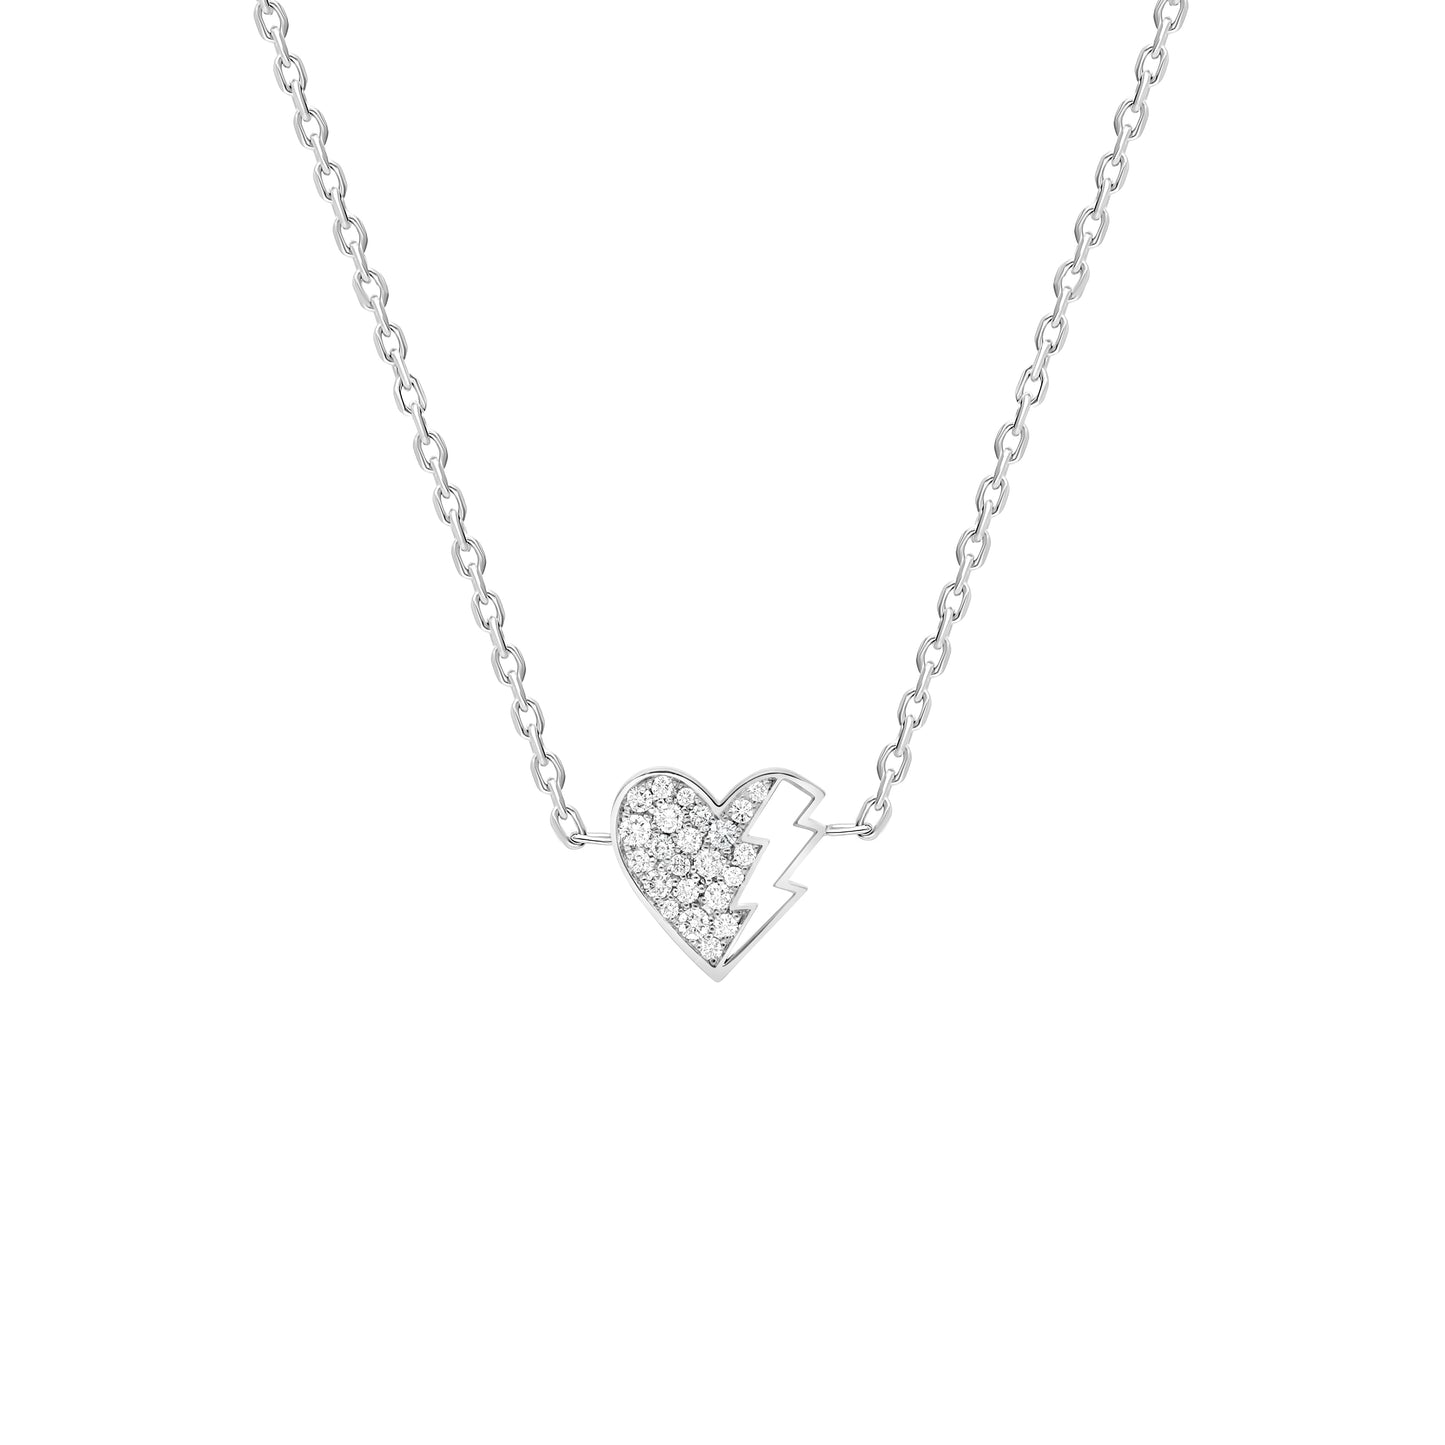 Lovetag diamond necklace